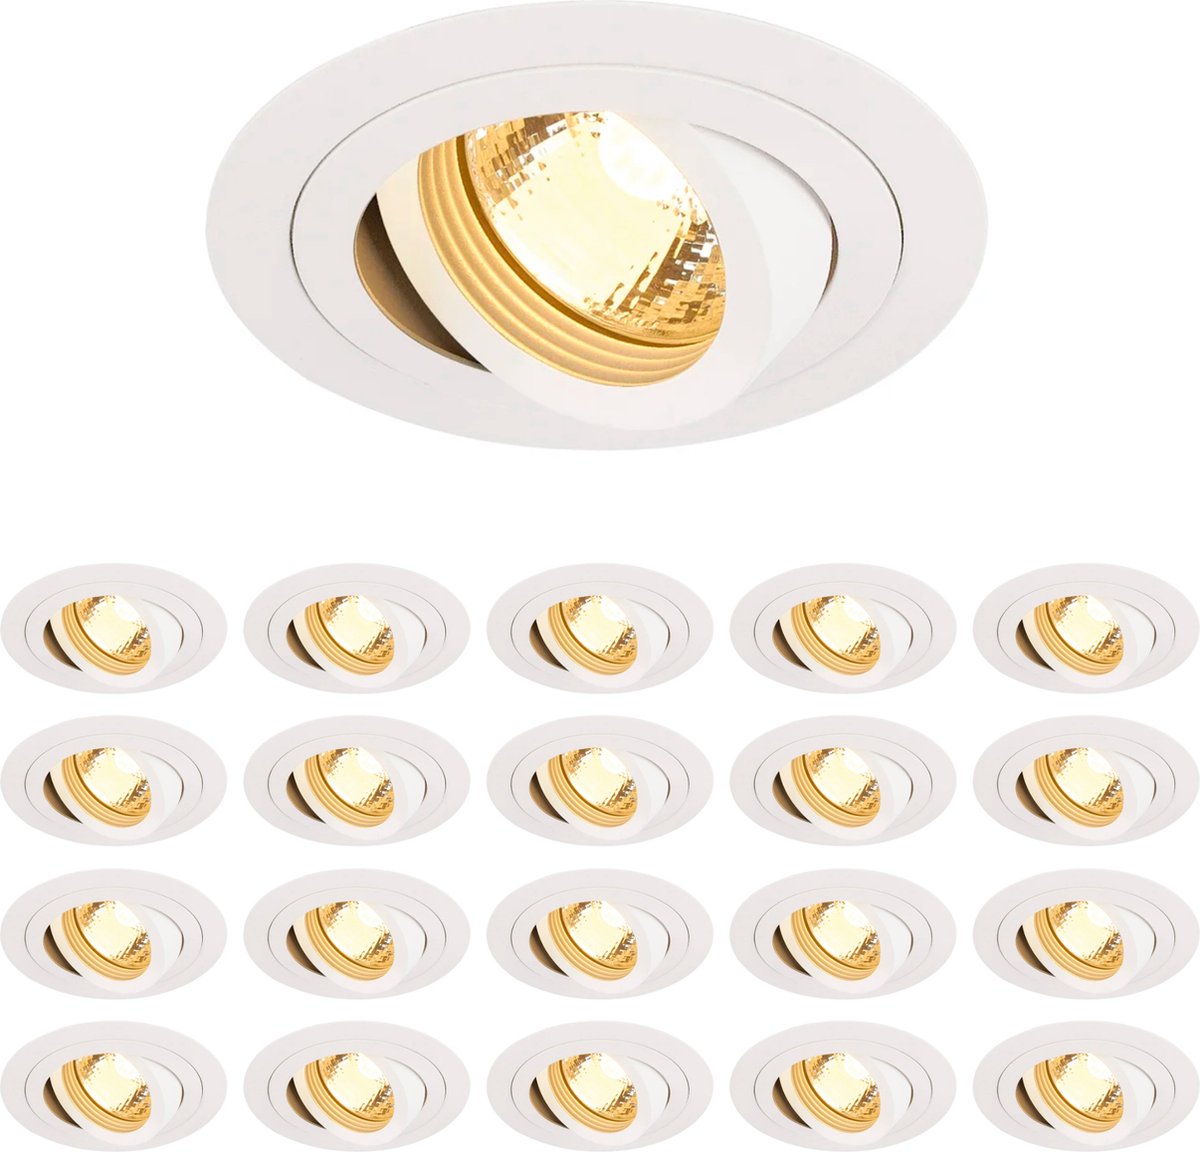 LongLife LED inbouwspots wit - Dimbaar warm wit licht - Spatwaterdicht - 20 stuks